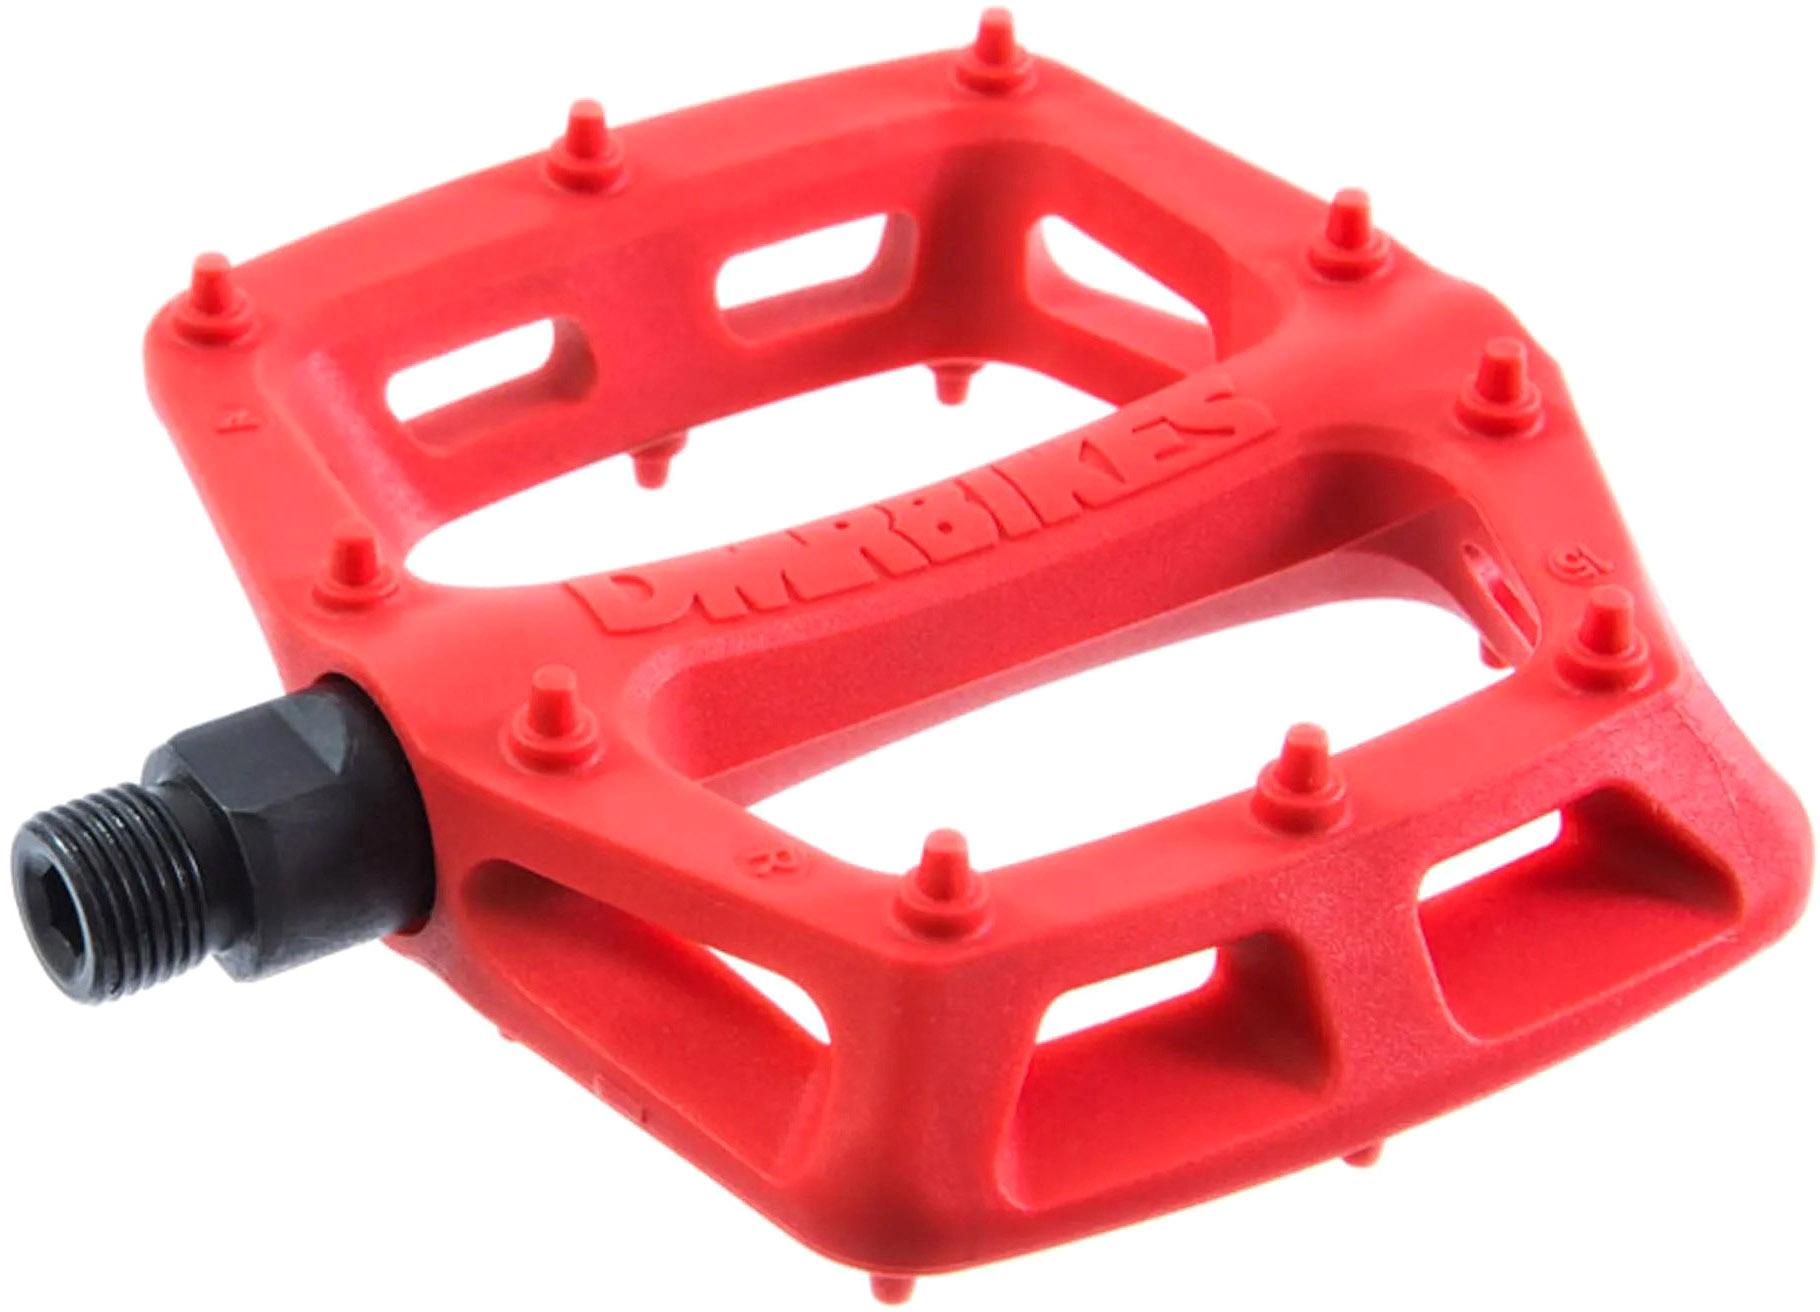 Dmr V6 Plastic Flat Pedals - Red